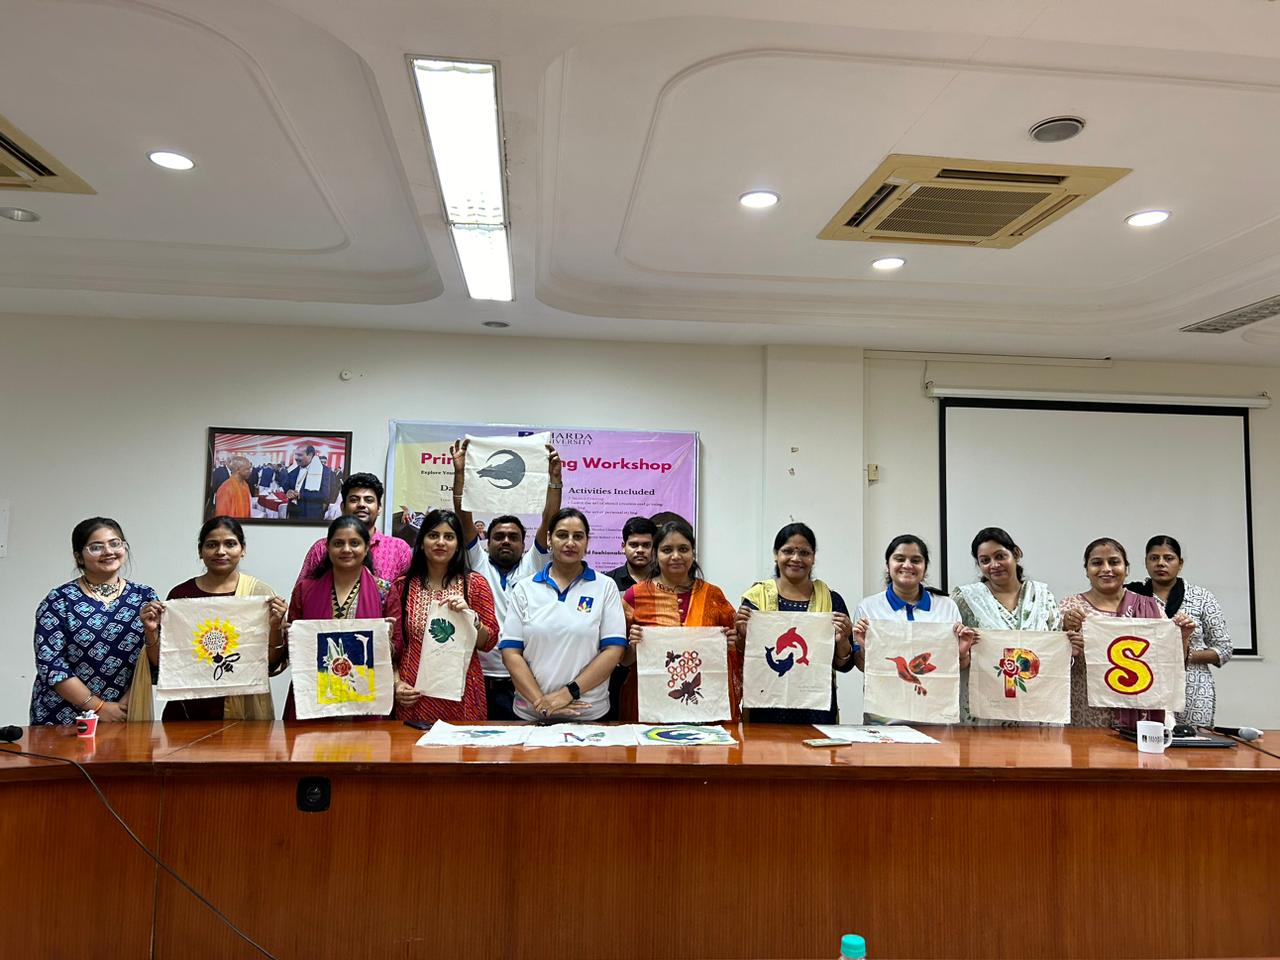 SSD organized an inspiring Printing & Styling Workshop - Sharda University Agra